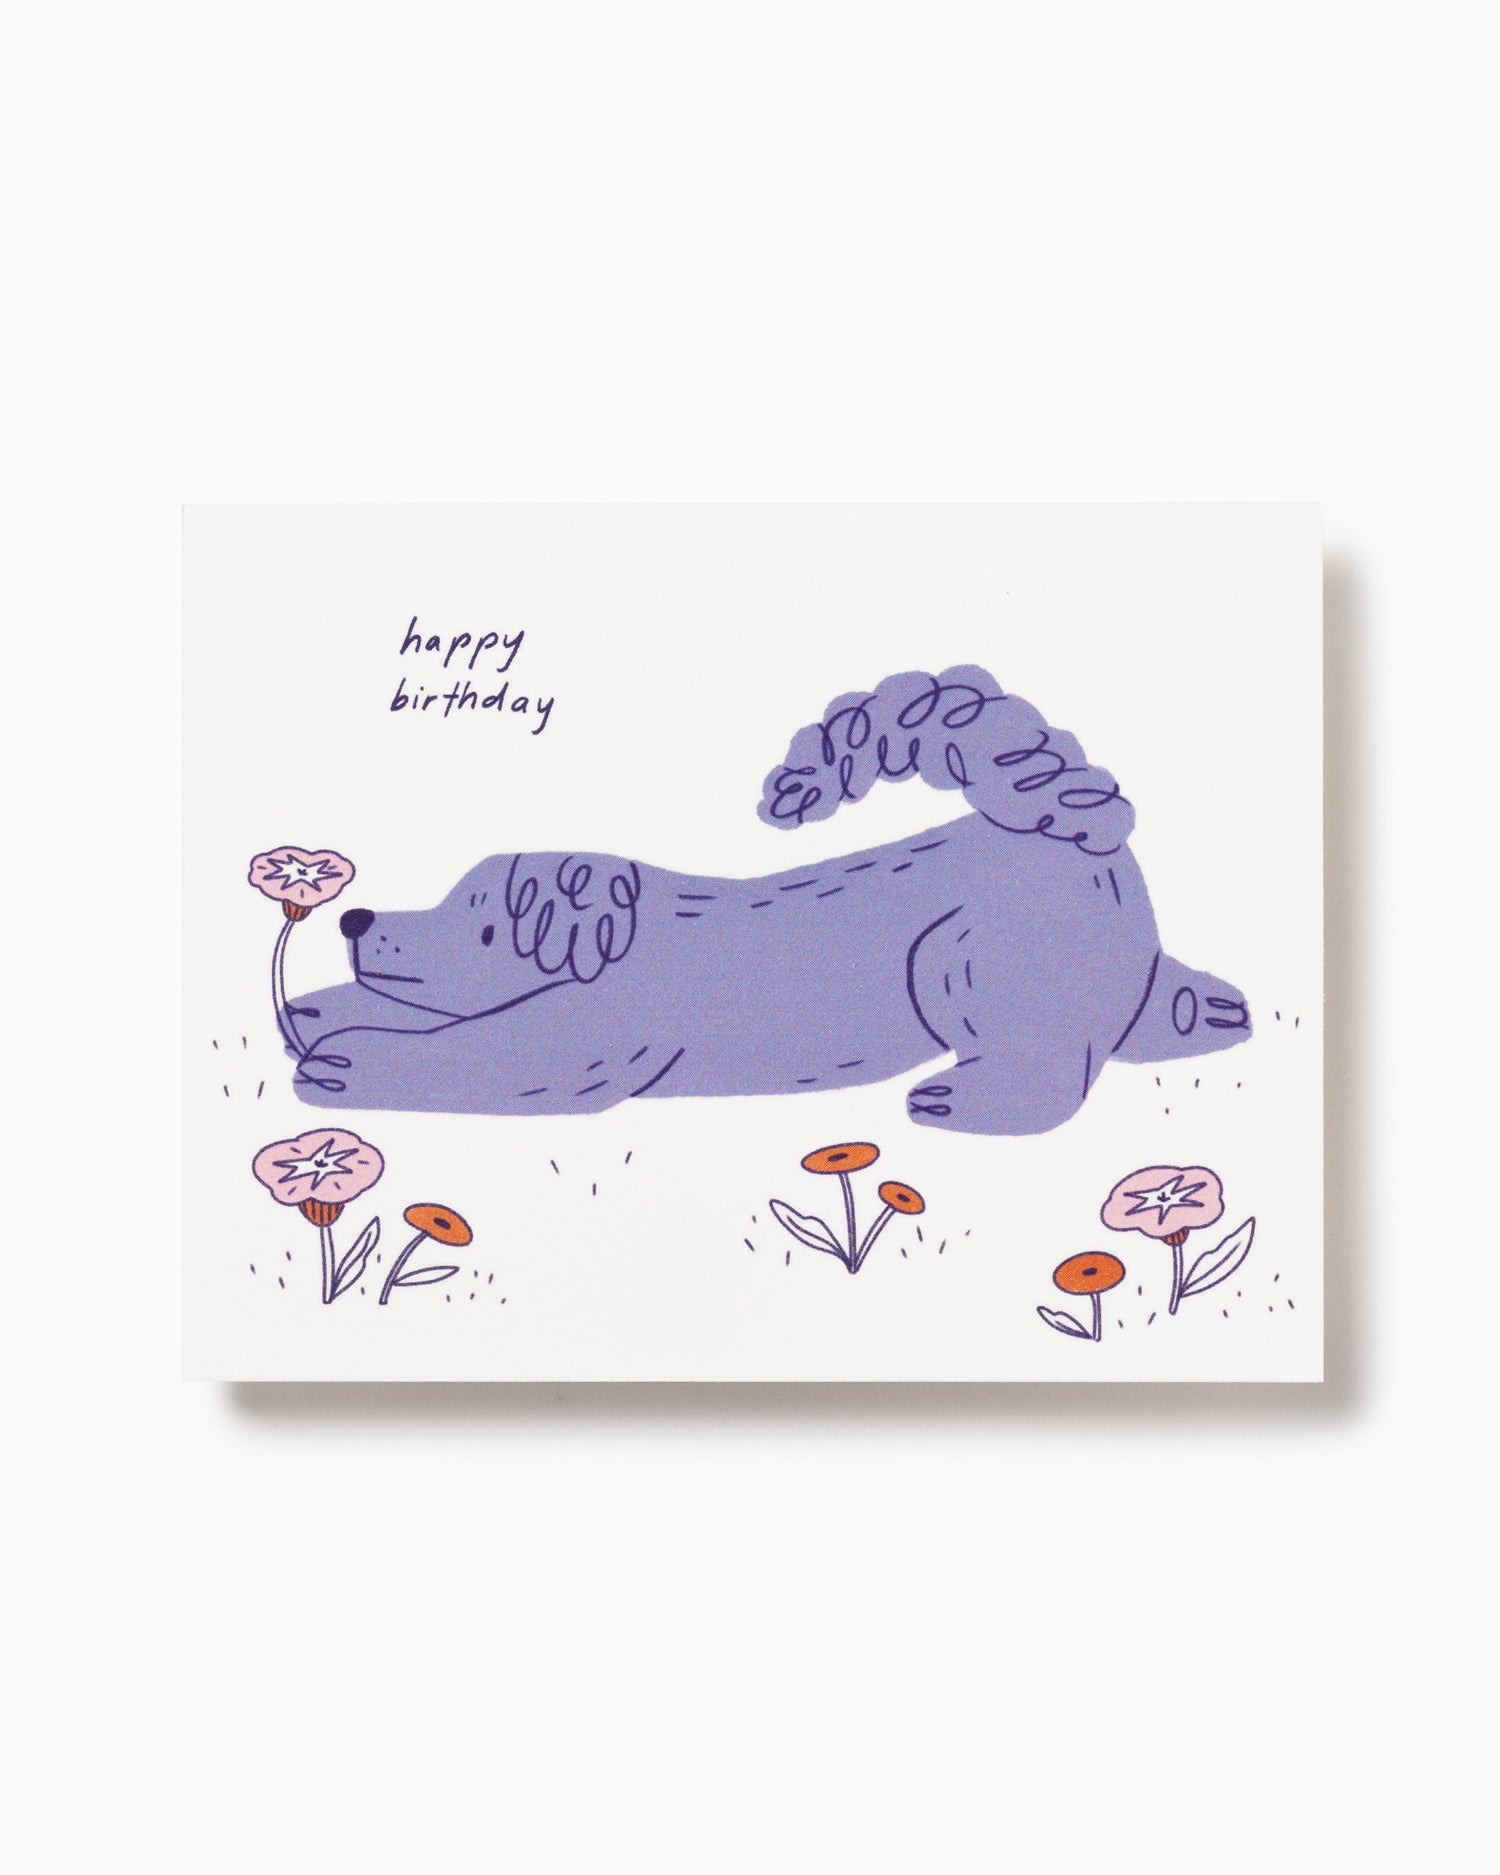 Happy Birthday - Doggo Greeting Card